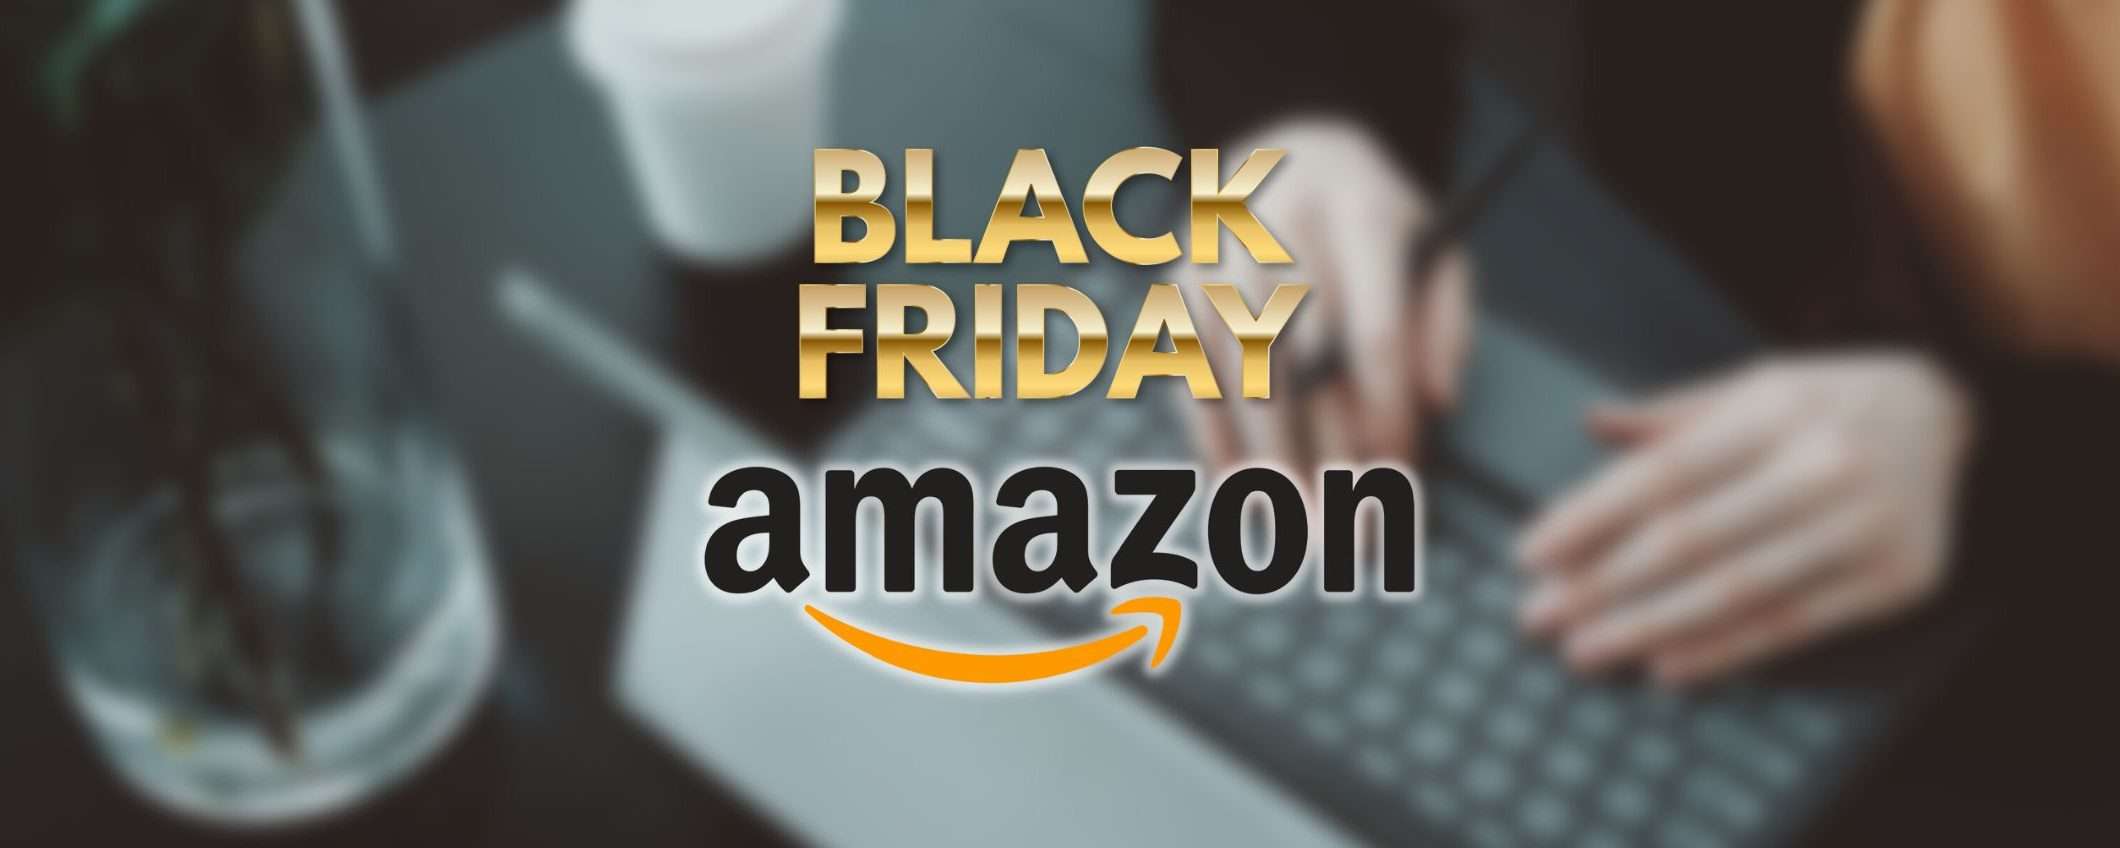 Black Friday Amazon: i migliori laptop in offerta